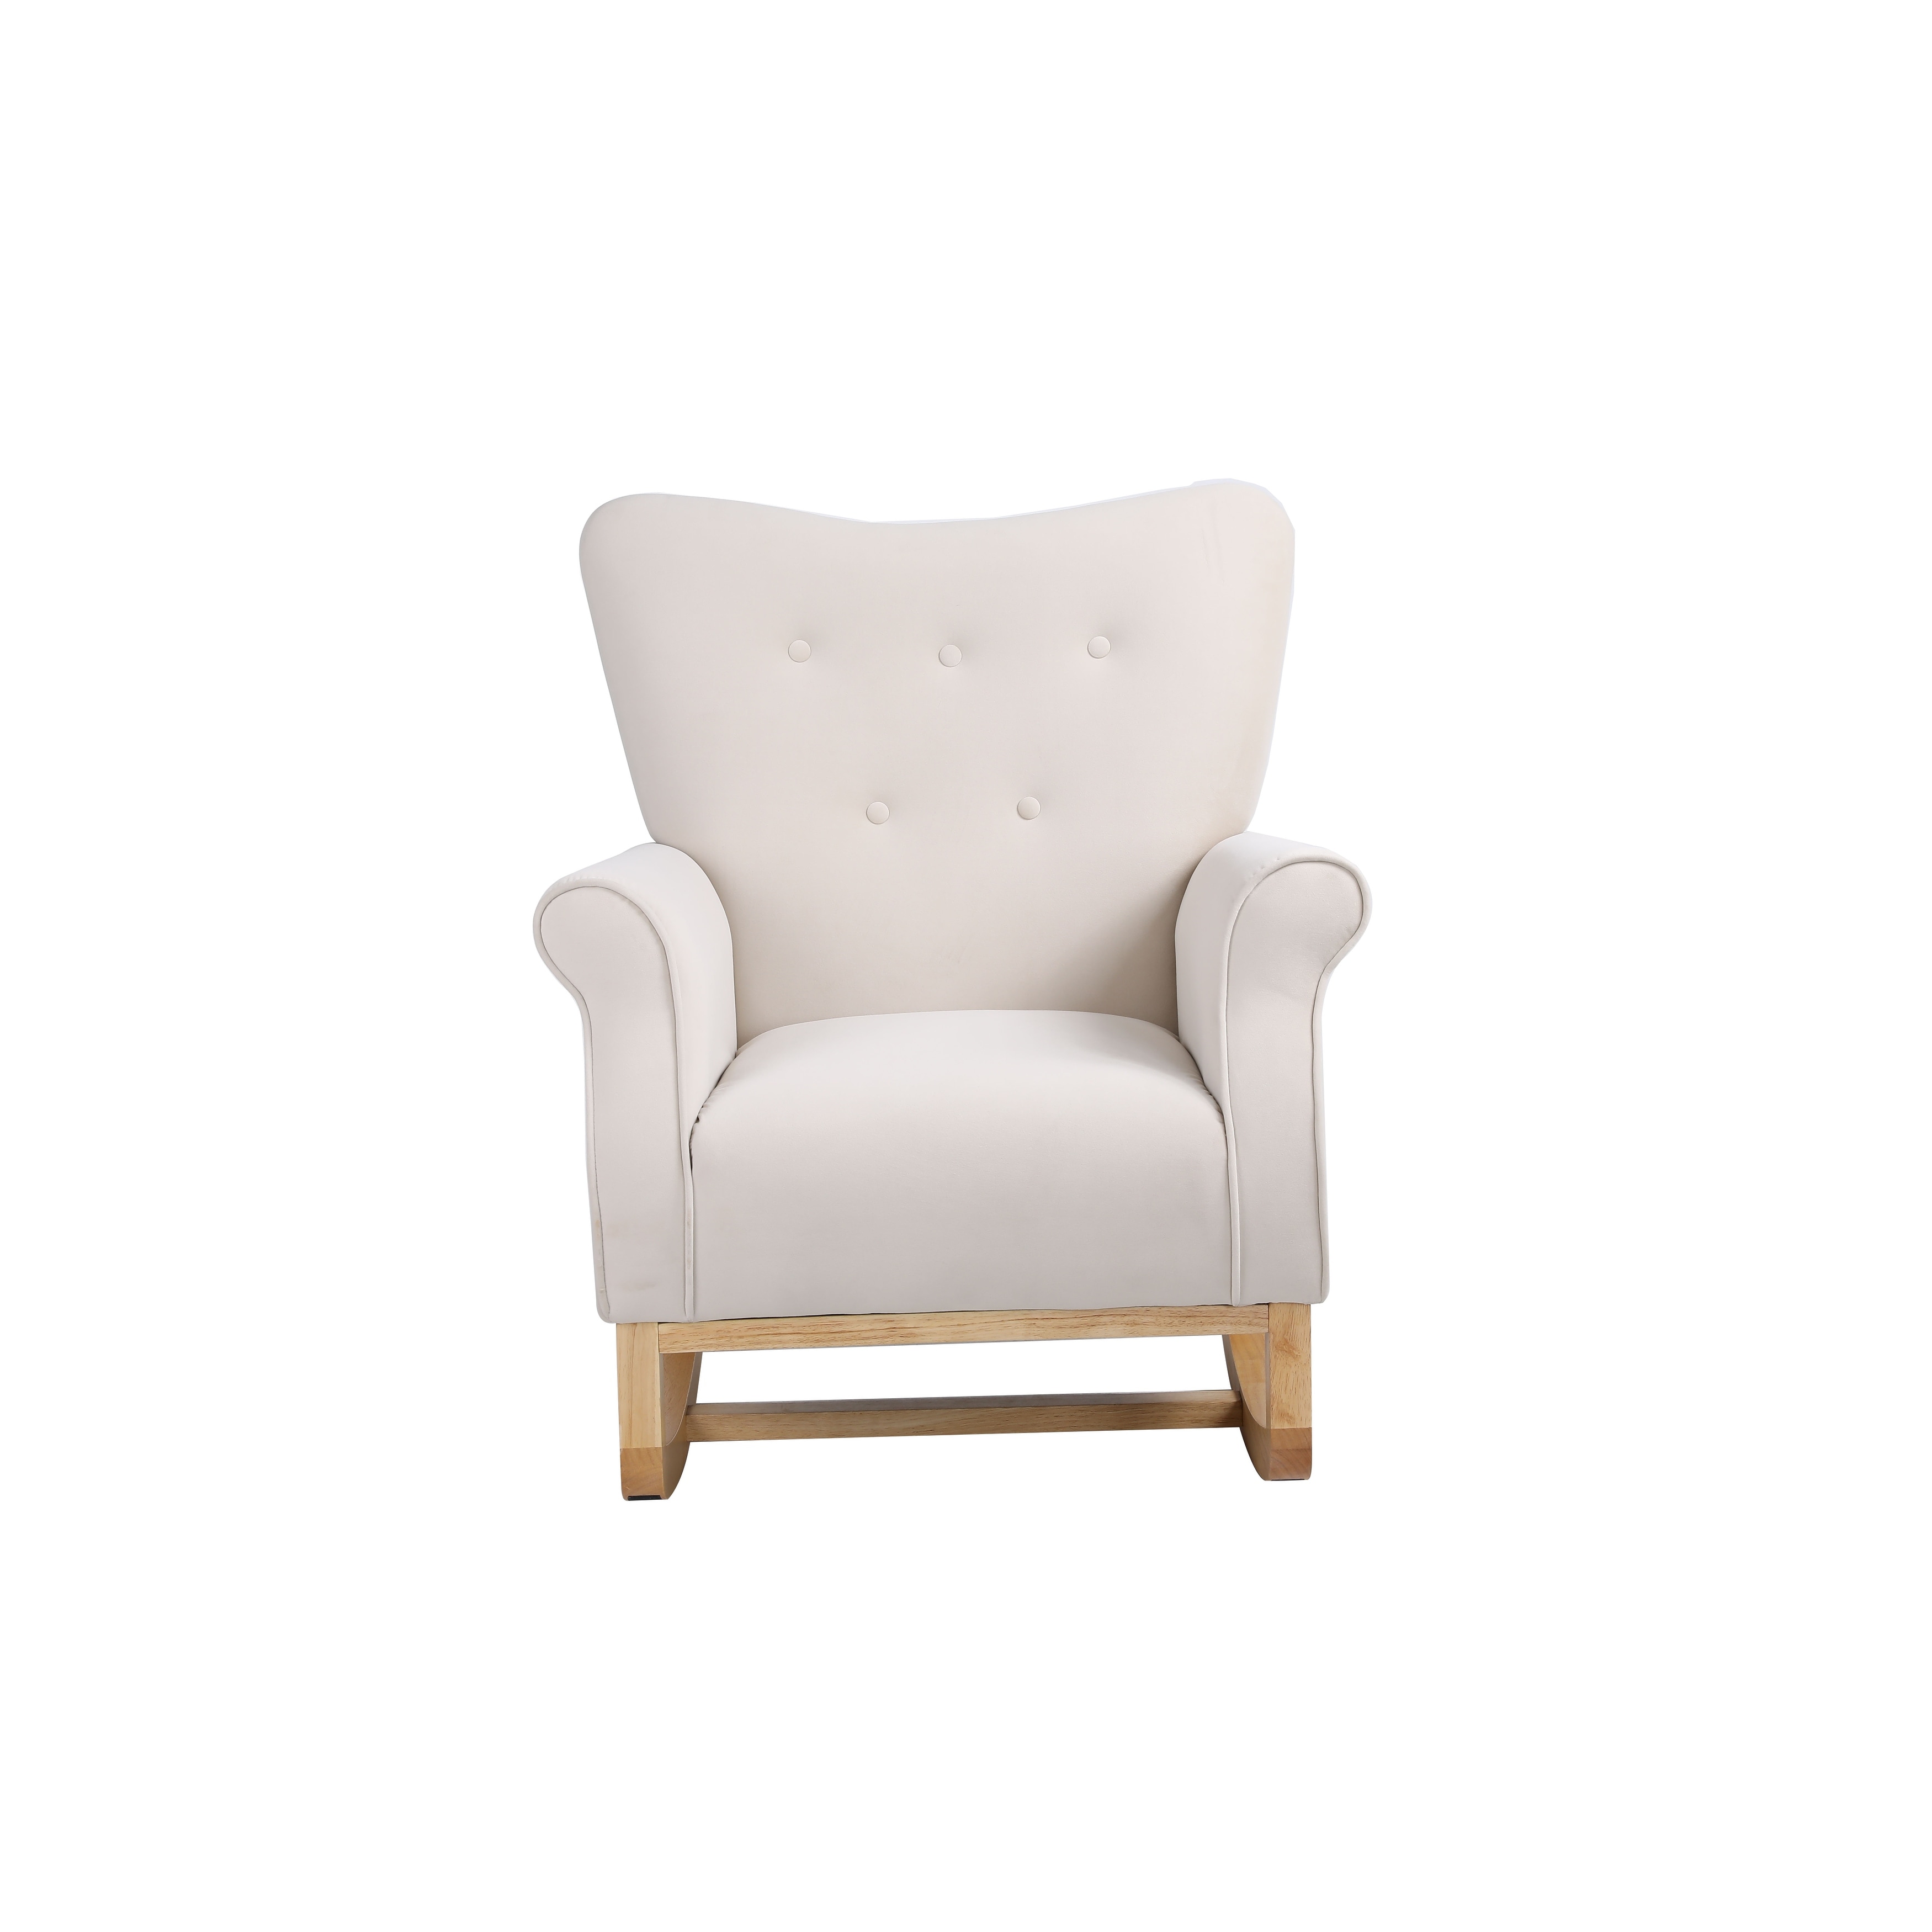 Mid Century velvet Fabric Rocker Chair with Wood Legs and for Livingroom Bedroom